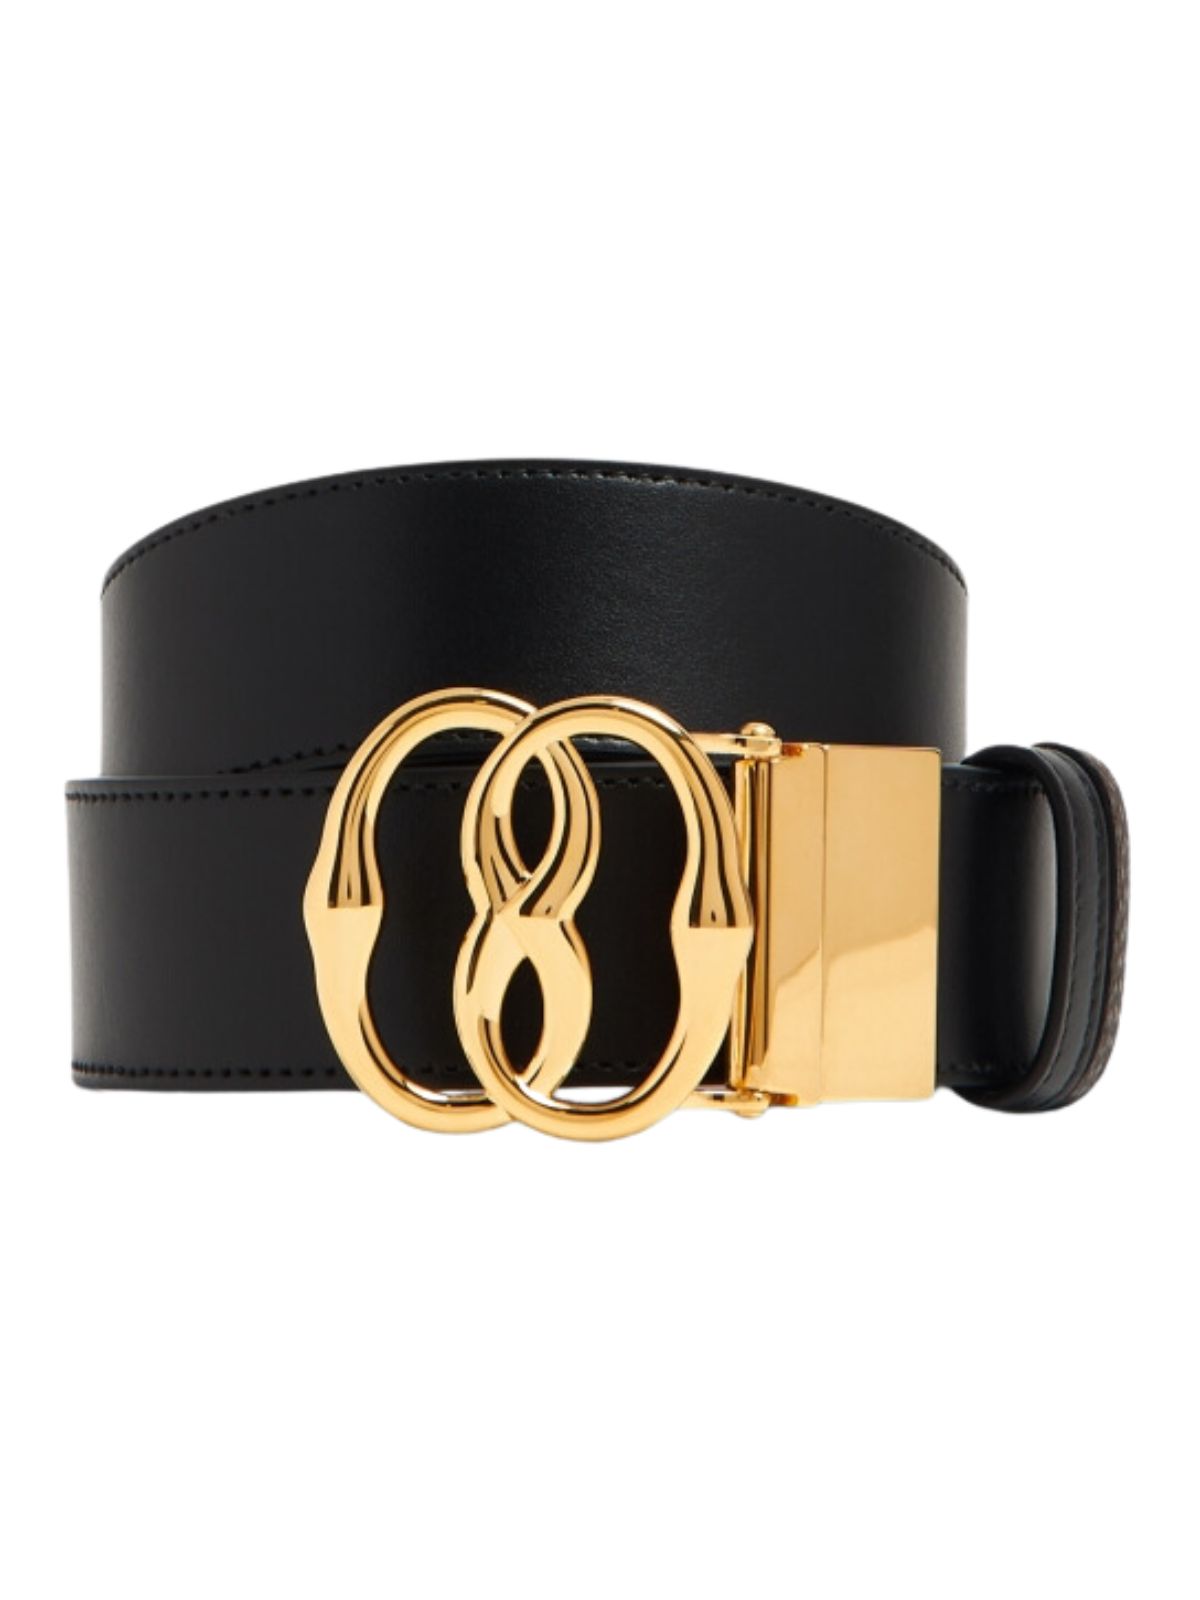 Bally Belt Buckle Logo Gold-Black - 1